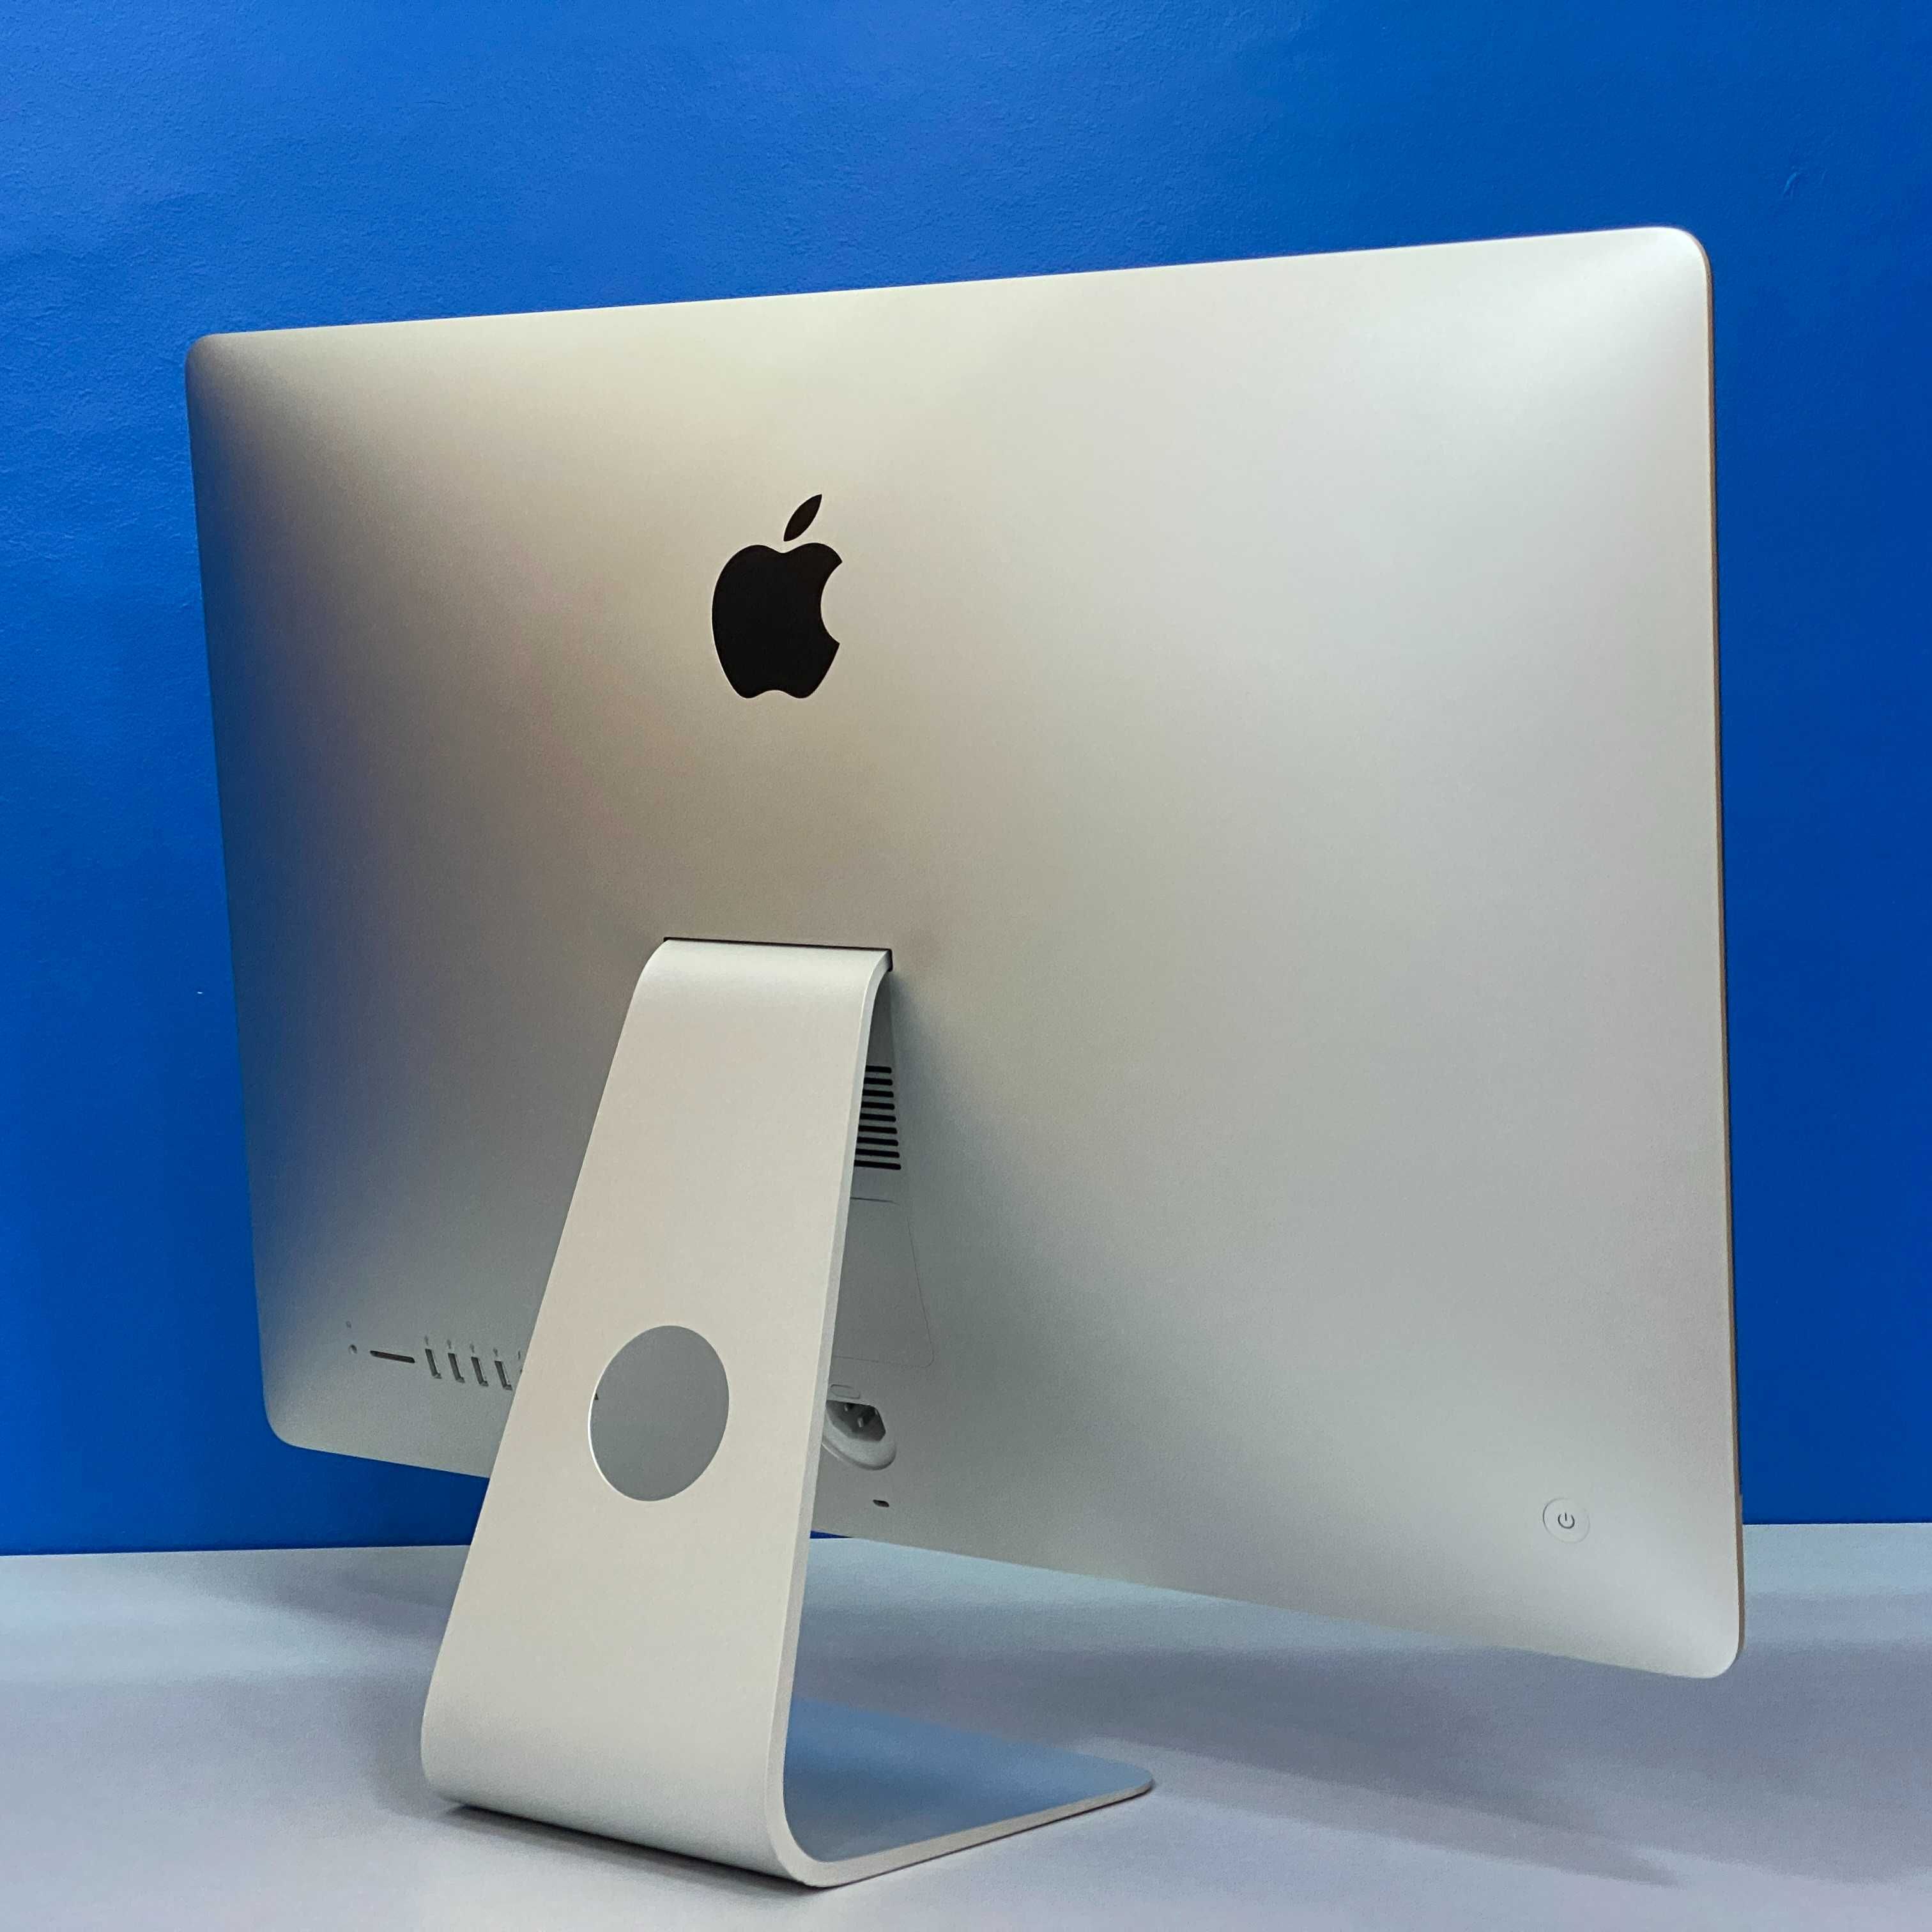 Apple iMac 27" 5K - A1419 - Late 2015 (i5/32GB/1TB Fusion/R9 M390 2GB)